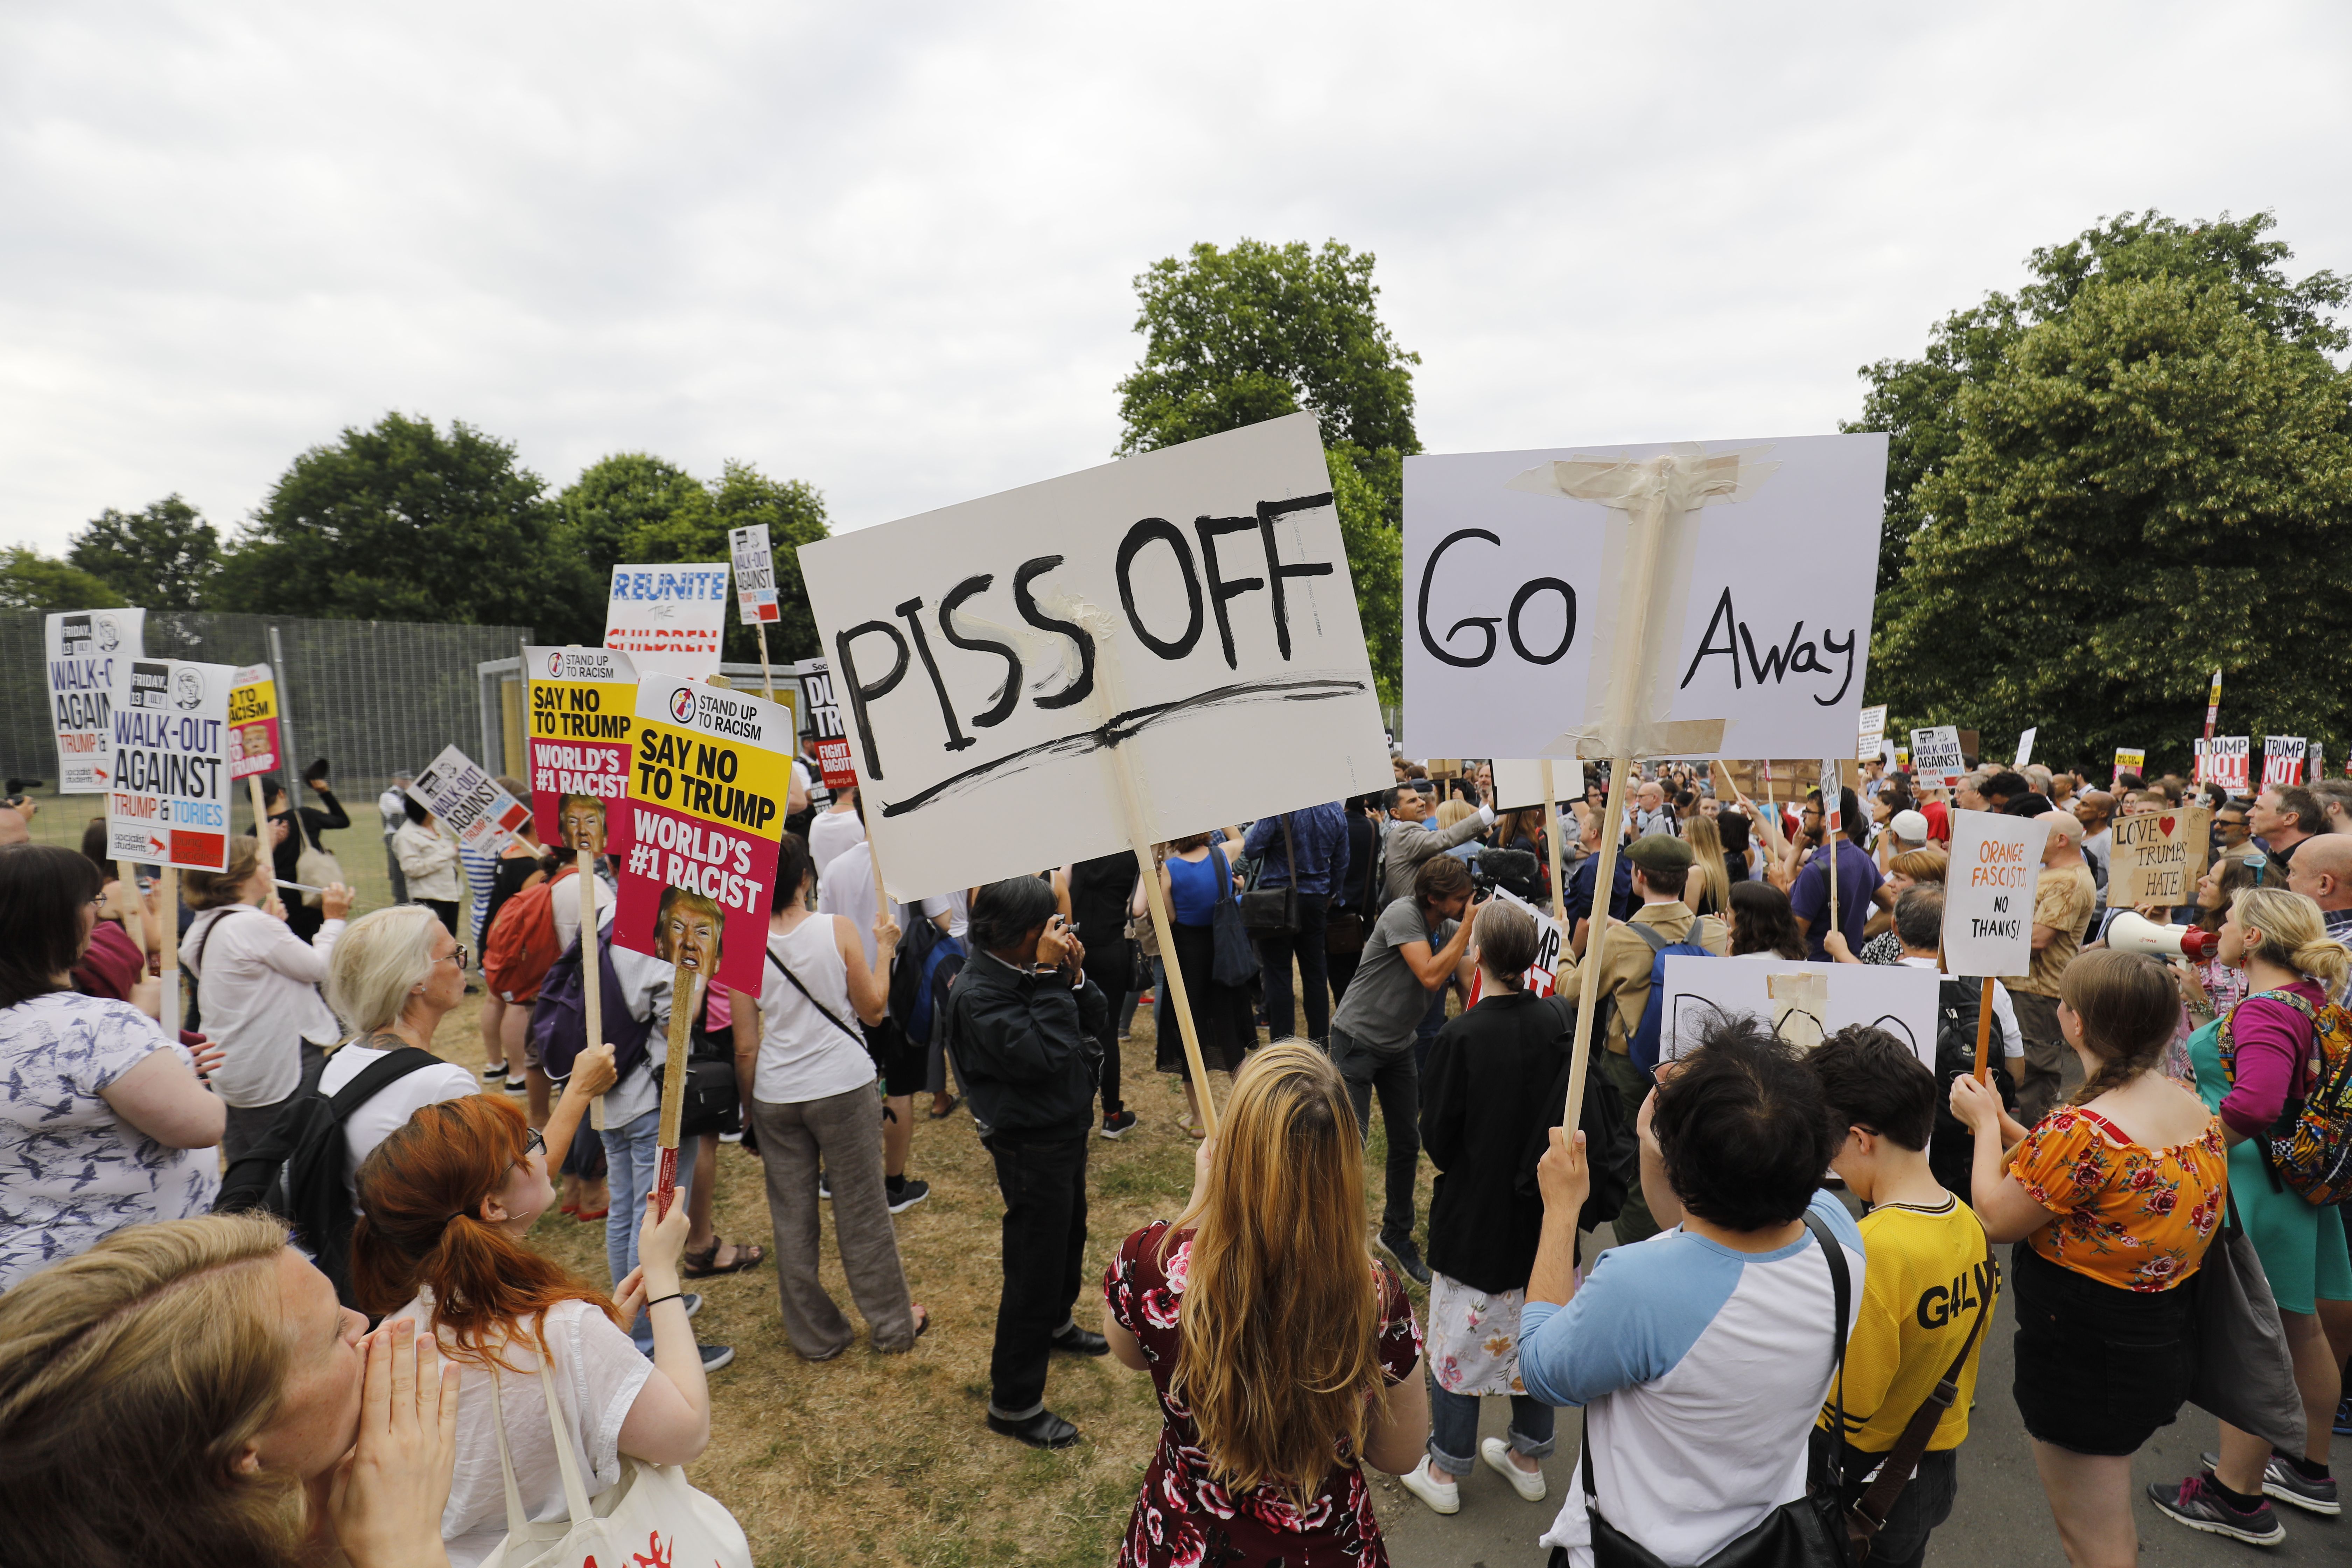 Protestors in London wave signs against Trump